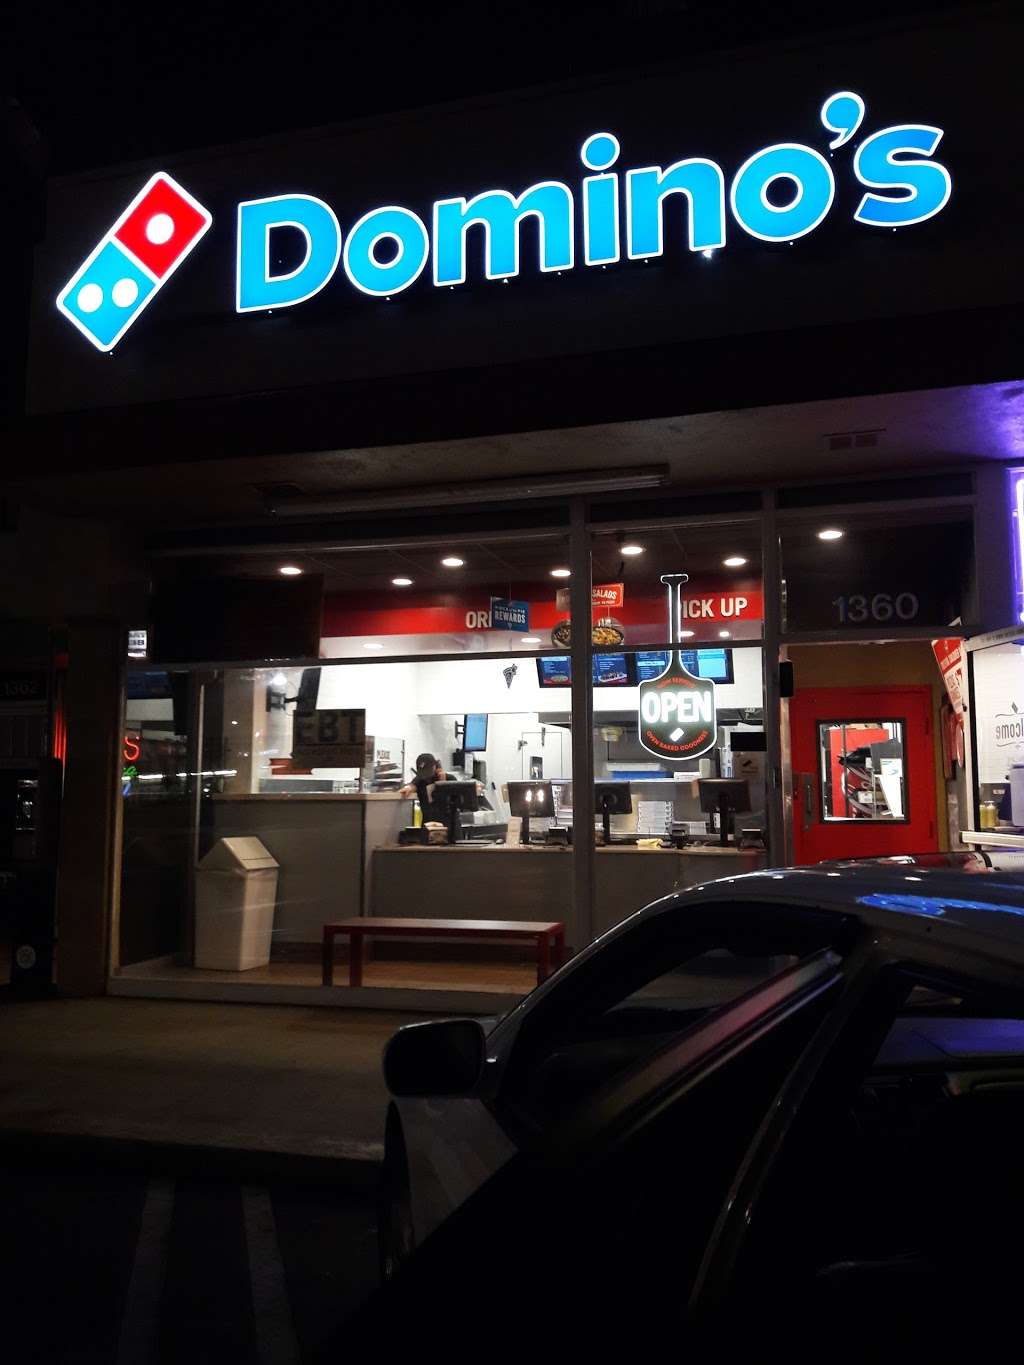 Dominos Pizza | 1360 N Avalon Blvd, Wilmington, CA 90744, USA | Phone: (310) 513-8040